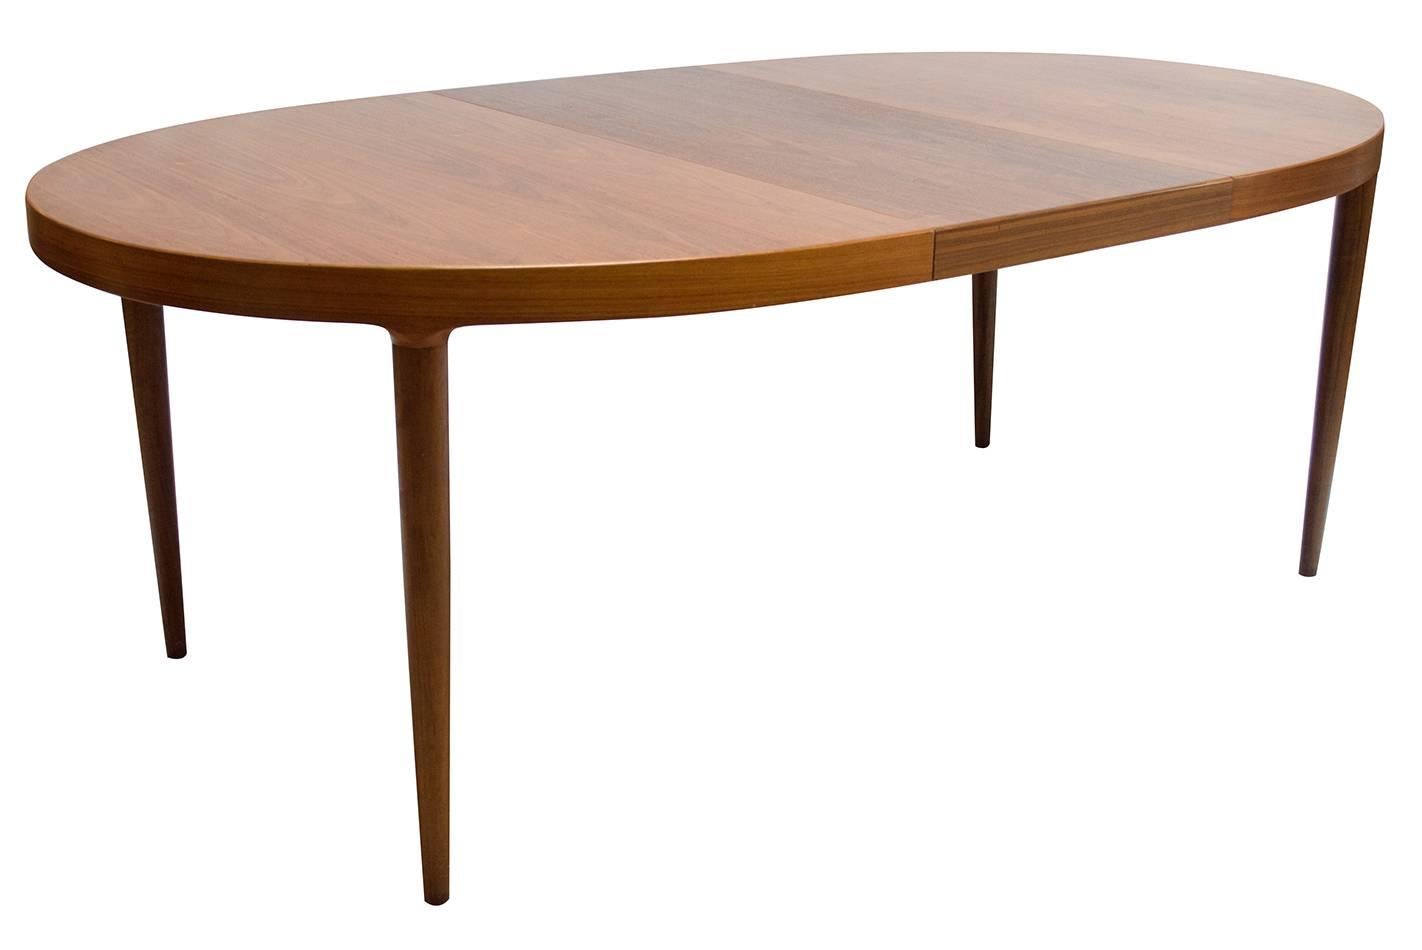 1960s Danish Modern walnut dining table designed by Skovmand & Andersen for Moreddi. The table has four leaves, each measuring 19.75